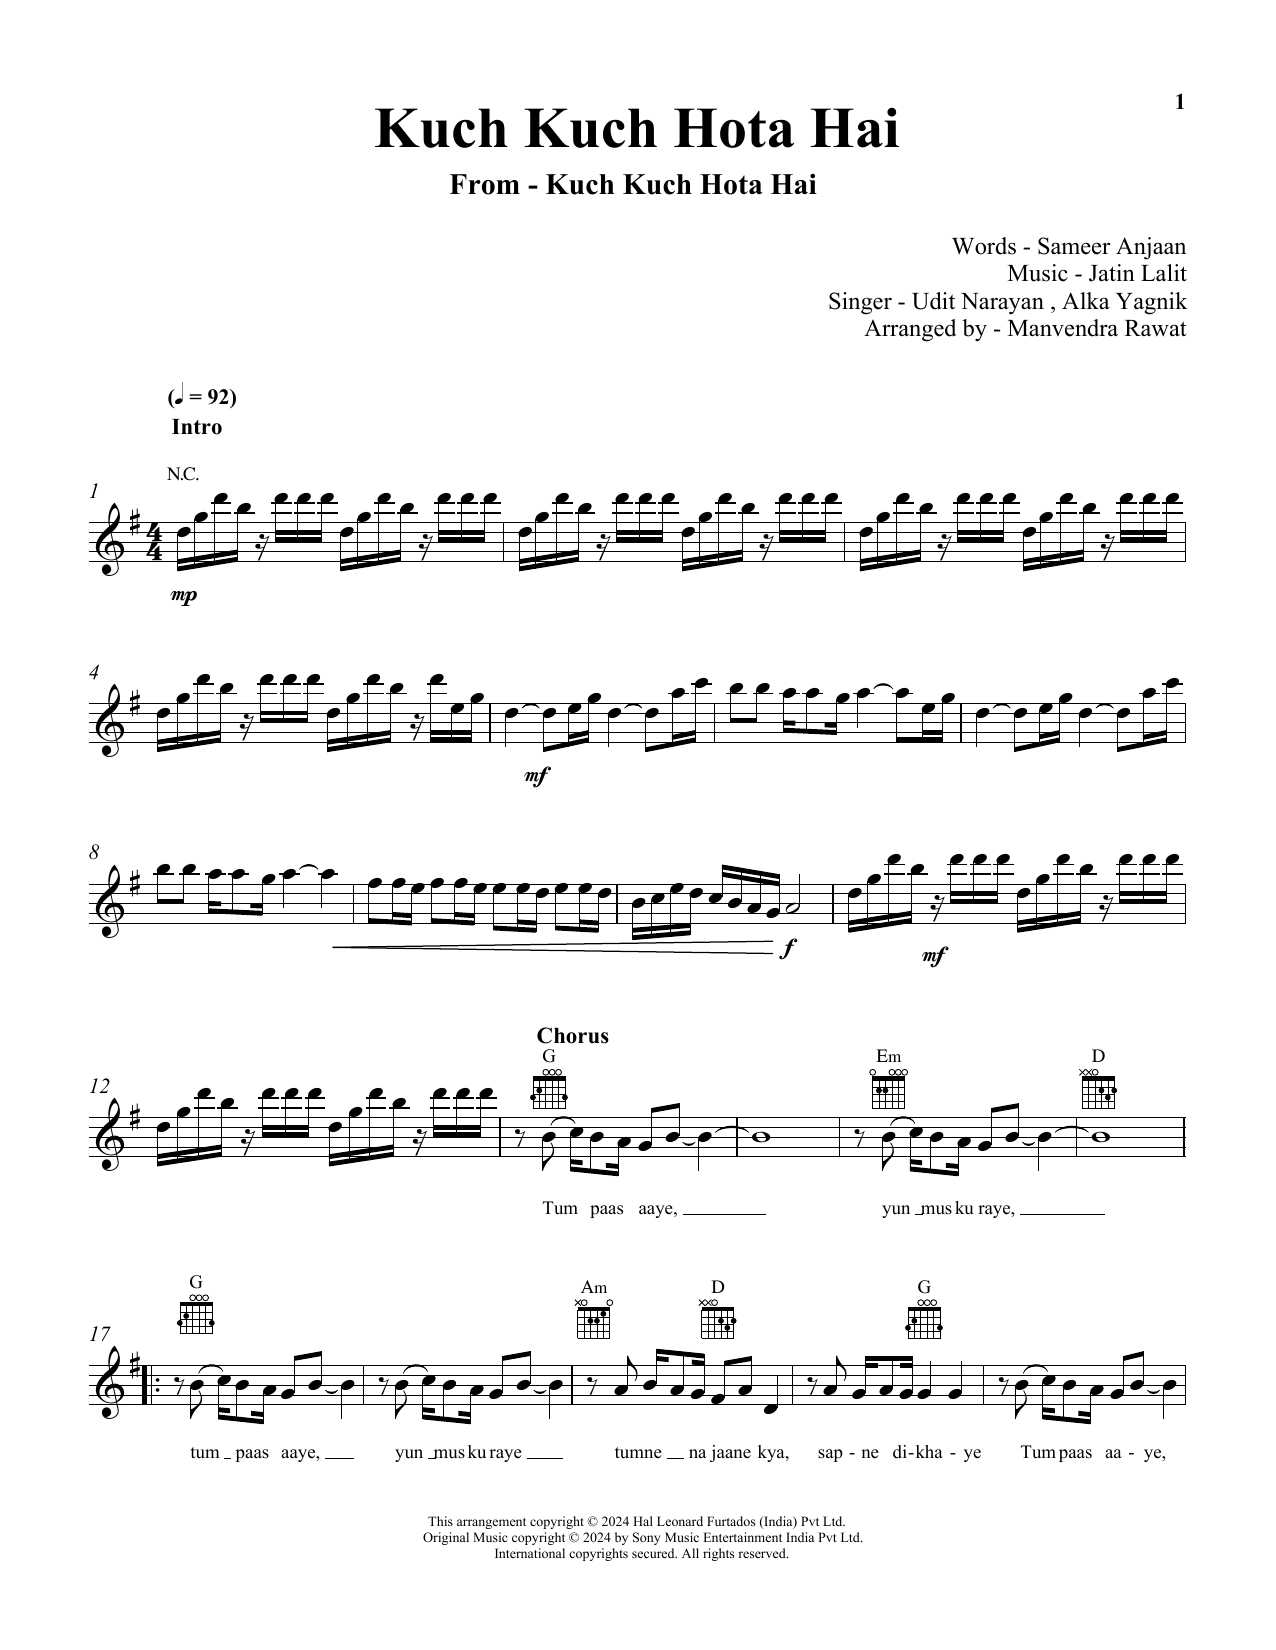 Download Udit Narayan & Alka Yagnik Kuch Kuch Hota Hai Sheet Music and learn how to play Lead Sheet / Fake Book PDF digital score in minutes